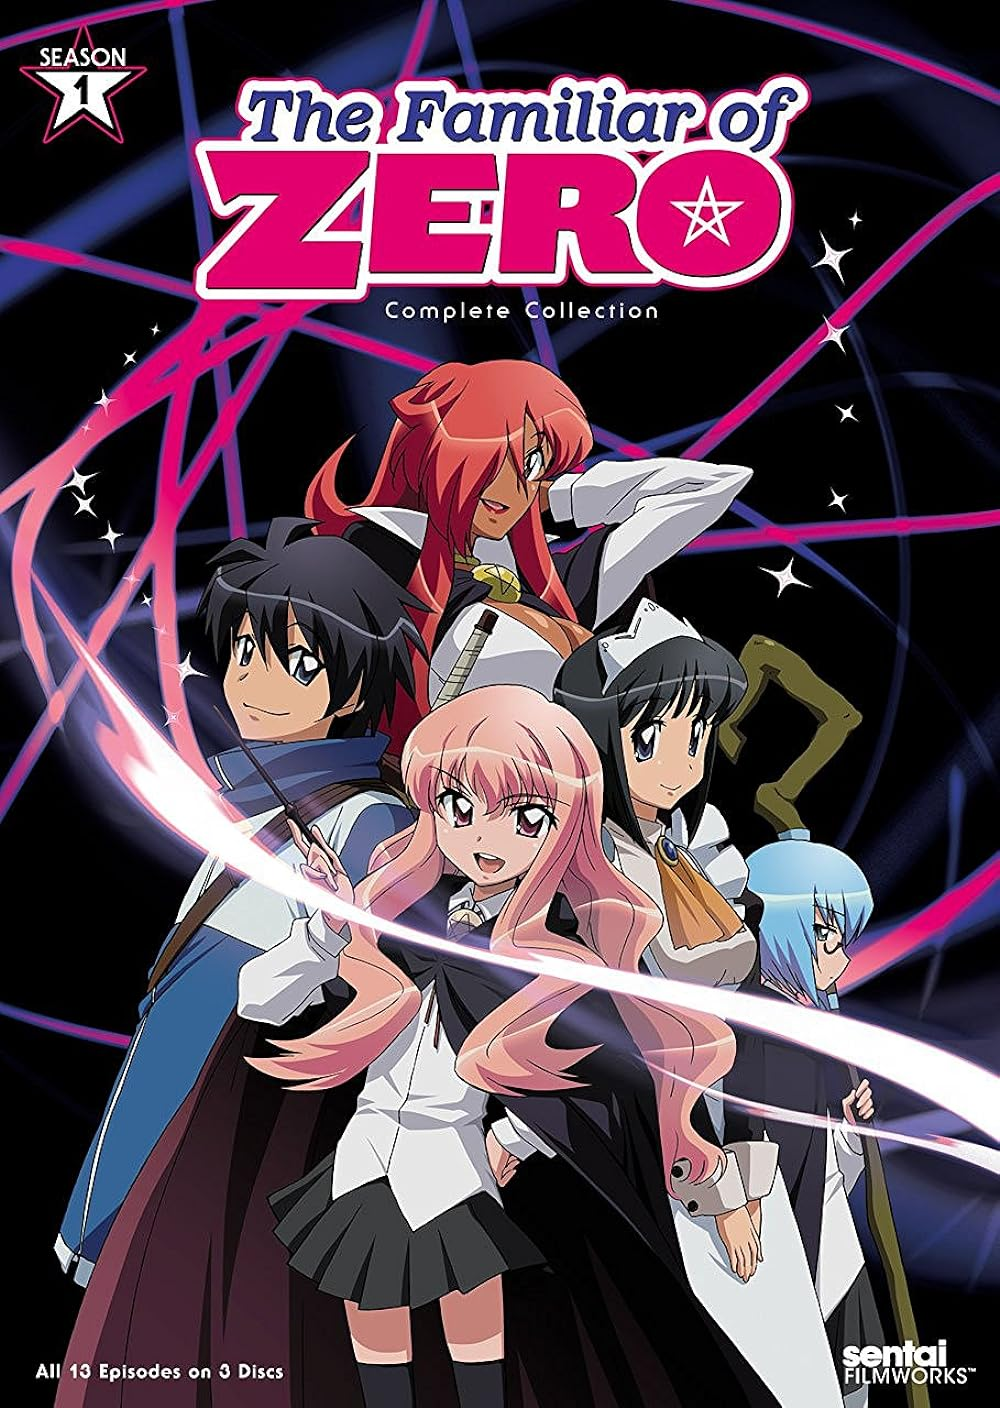 The Familiar Of Zero Visual anime like High School DxD